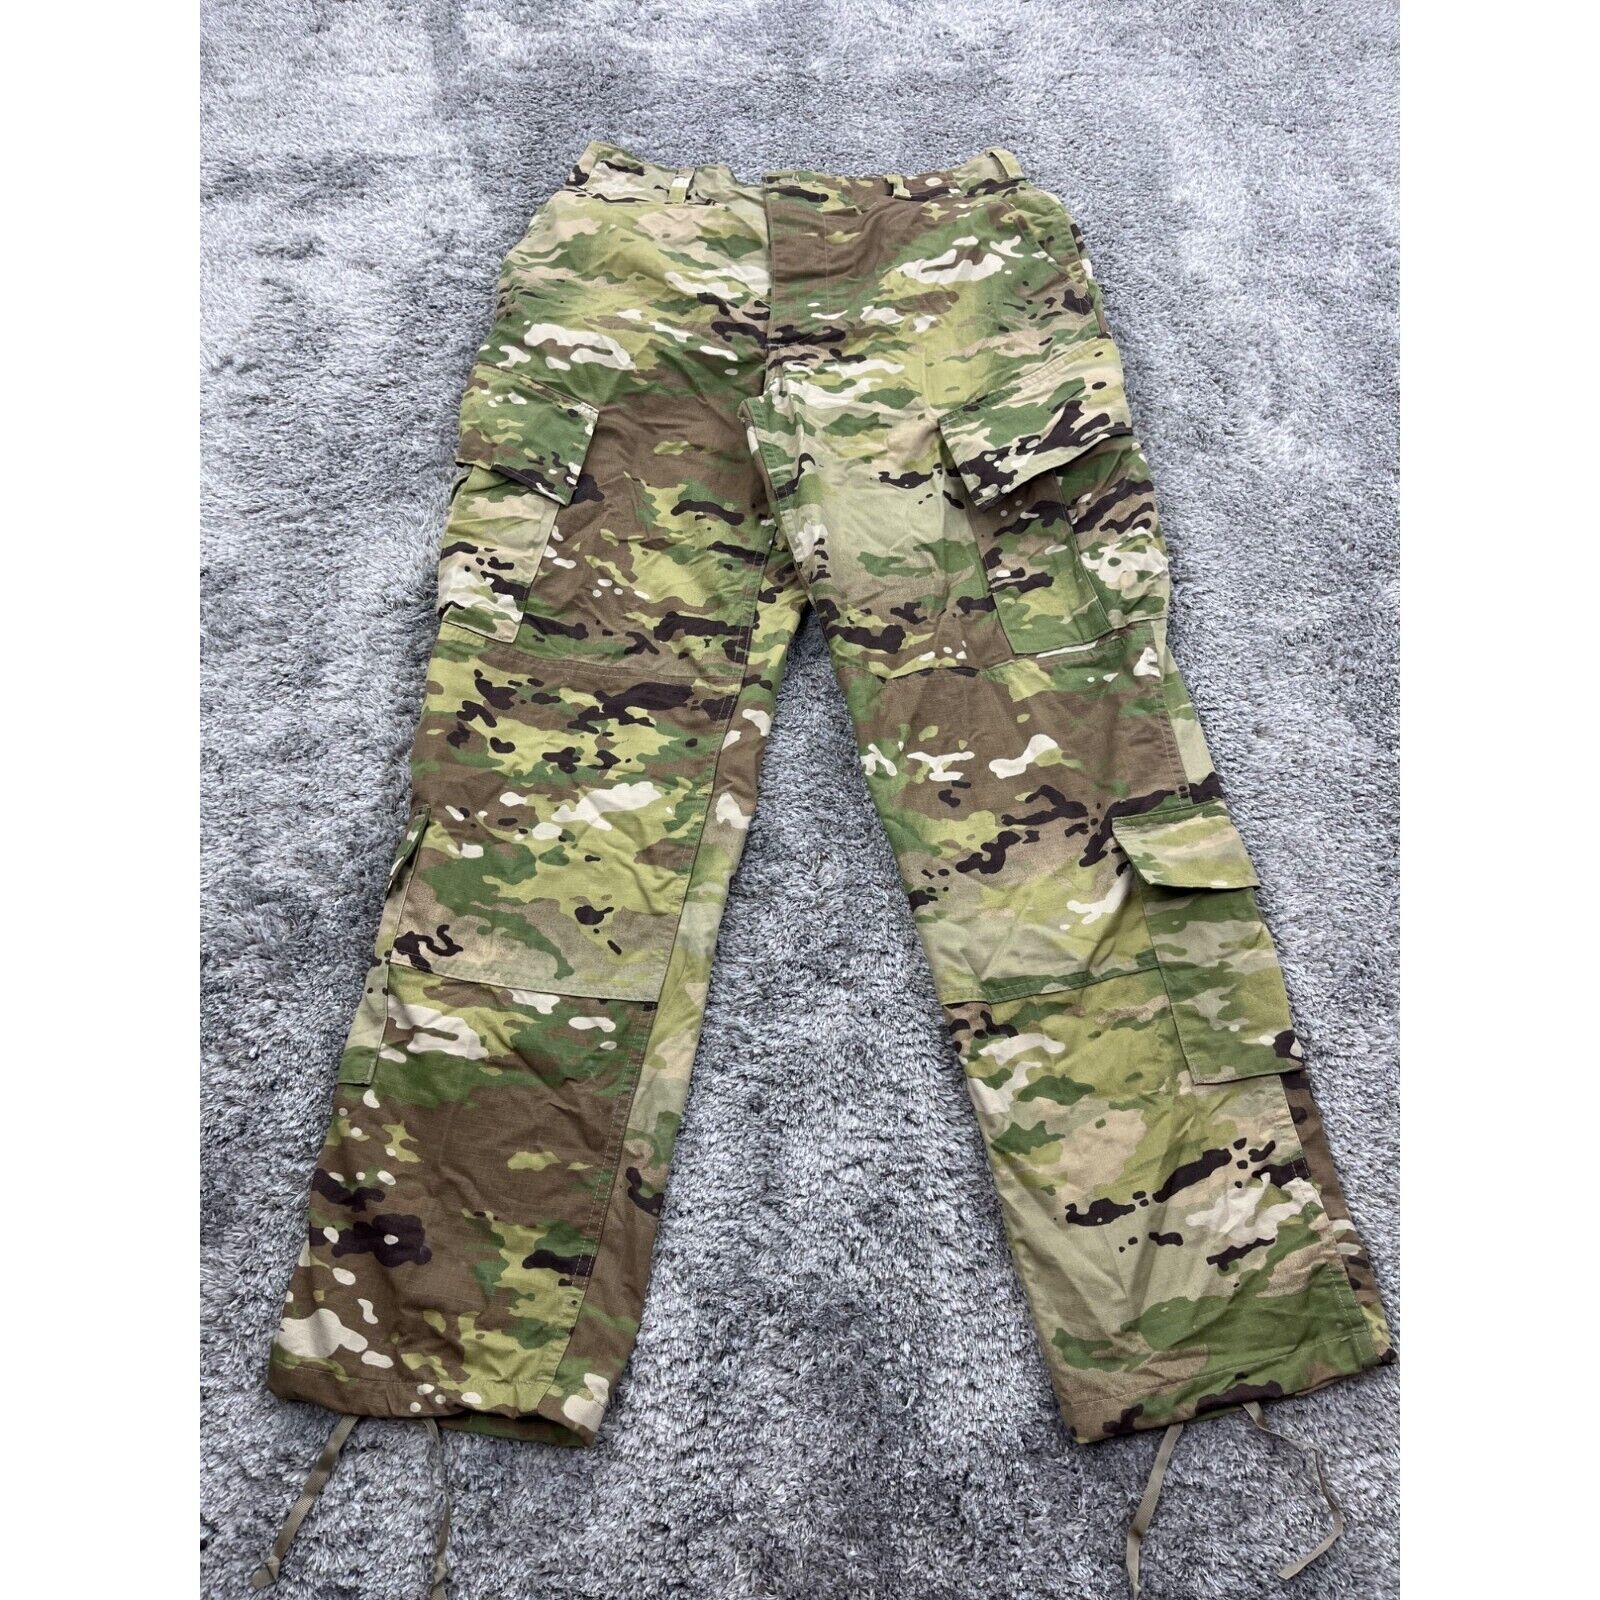 US Army Combat Uniform Trousers Medium Camo Ripstop Cargo Military Tactical Pant